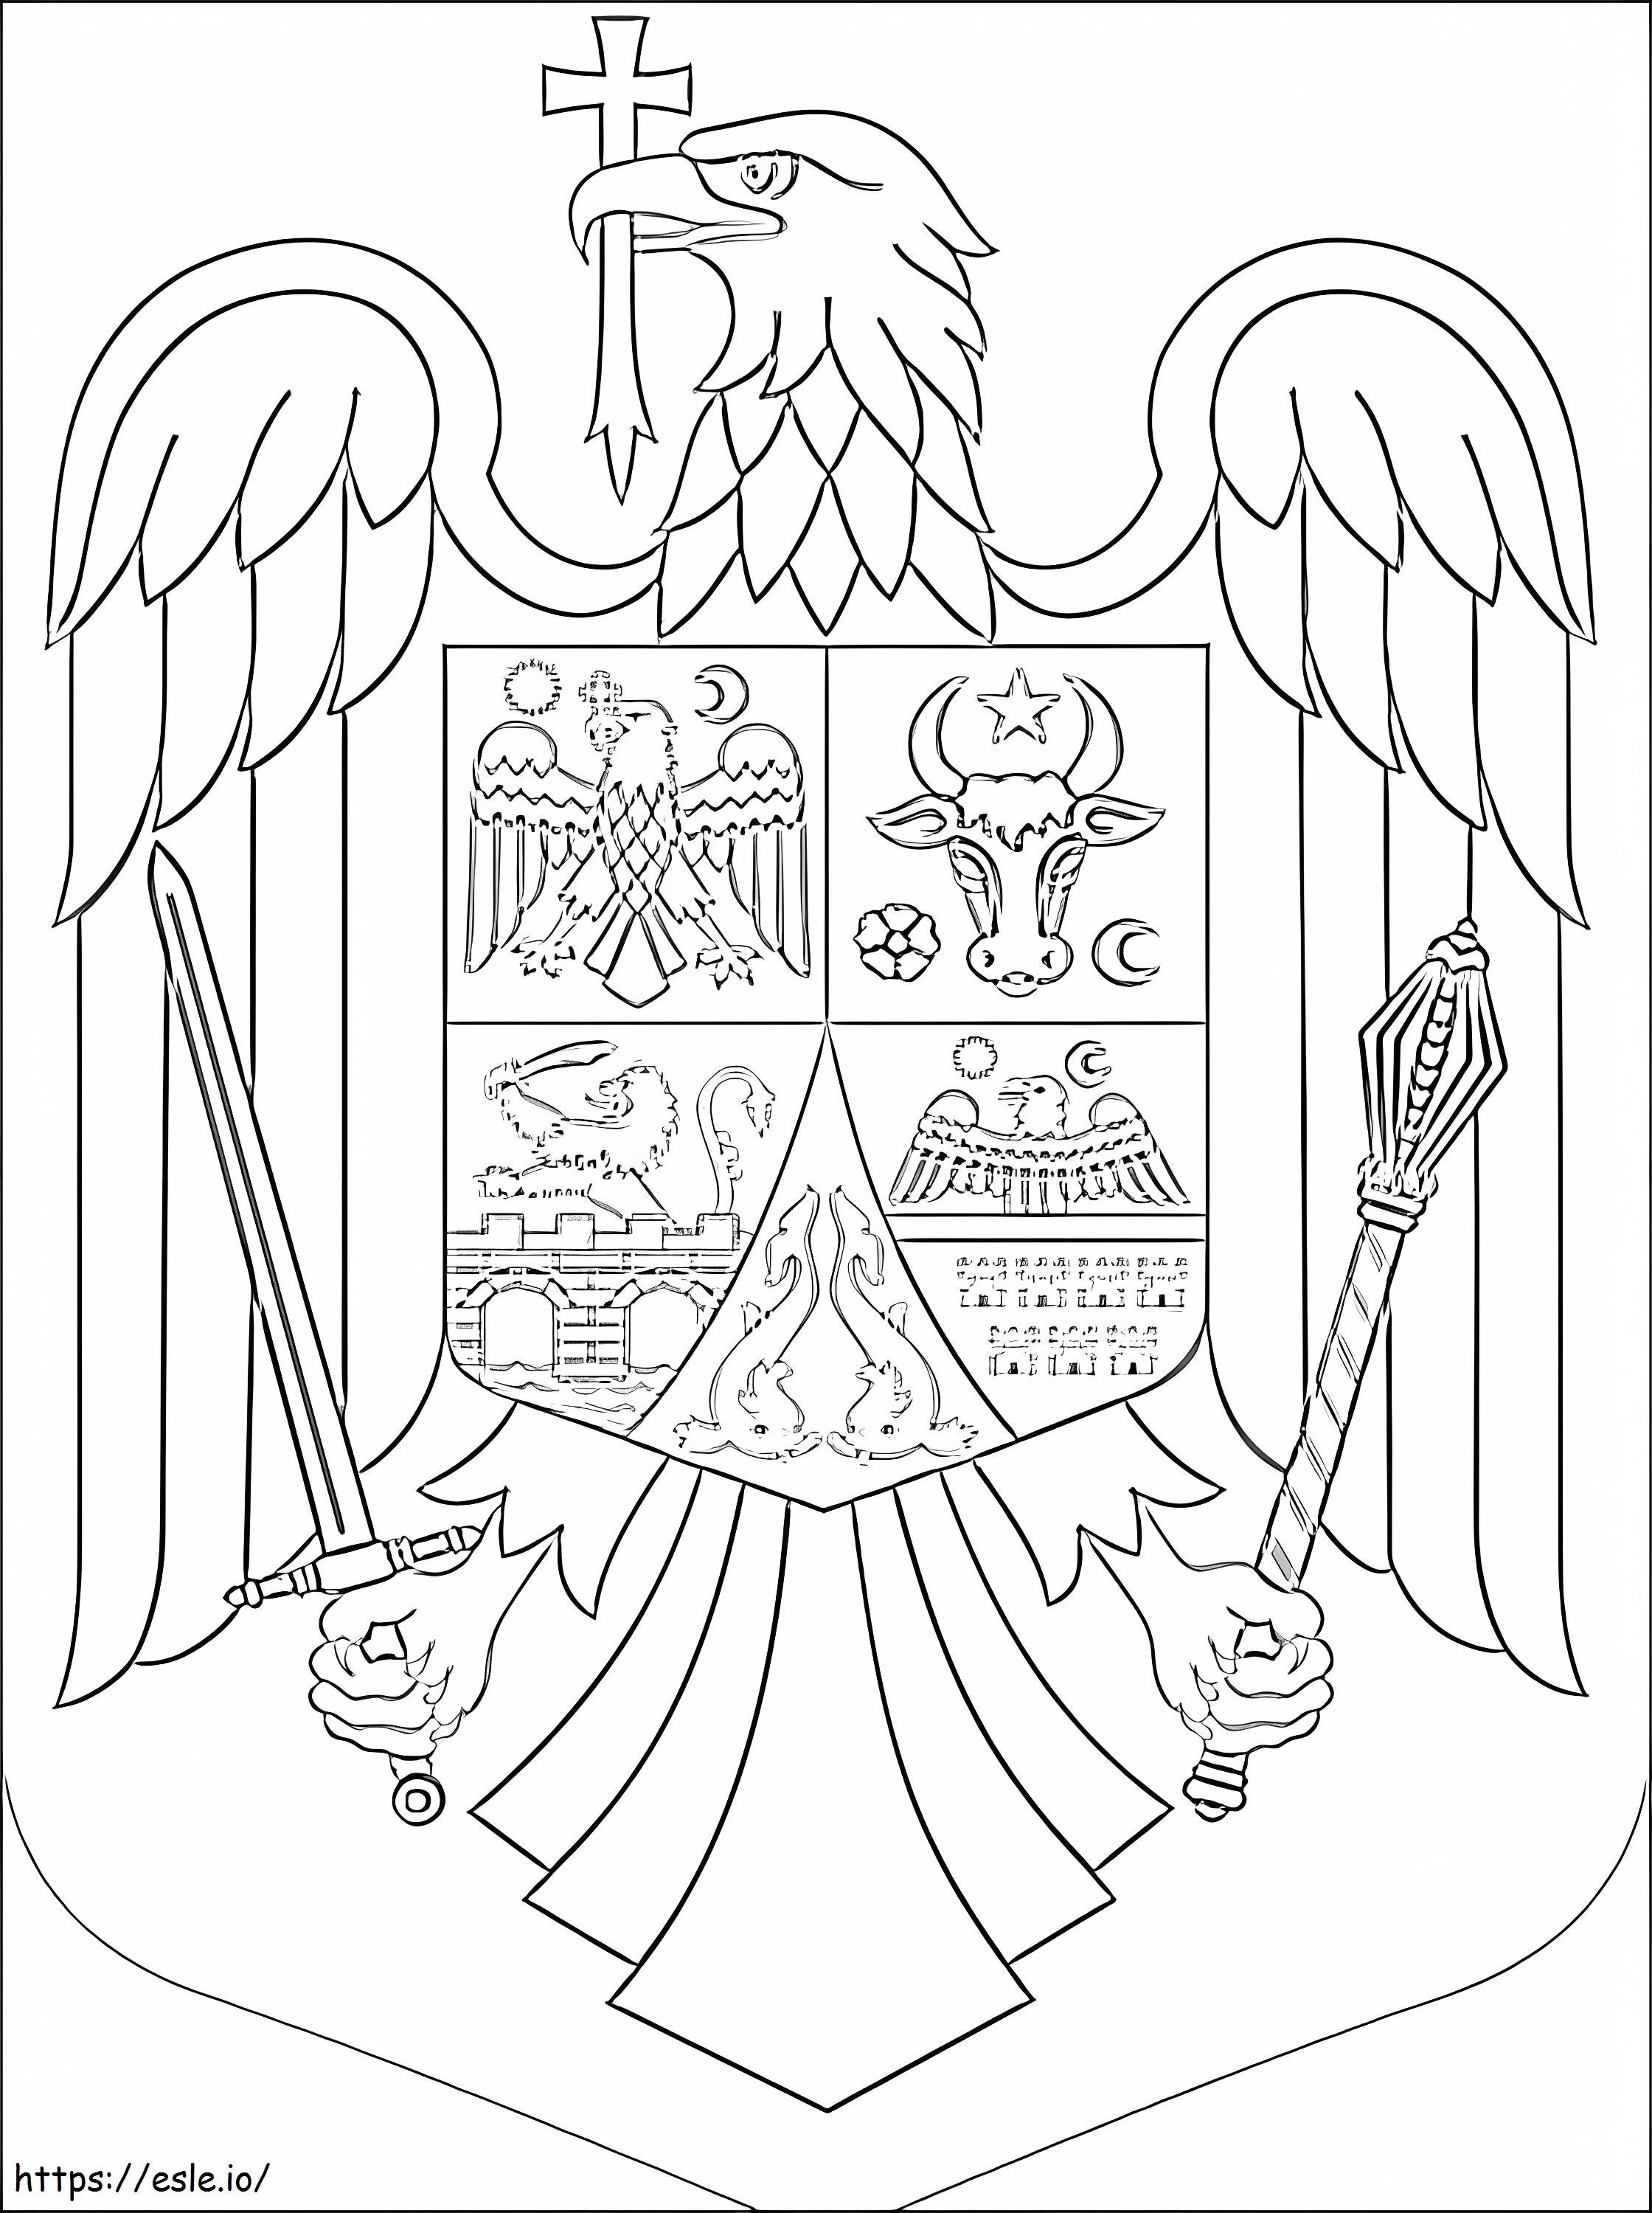 Wappen Rumäniens ausmalbilder